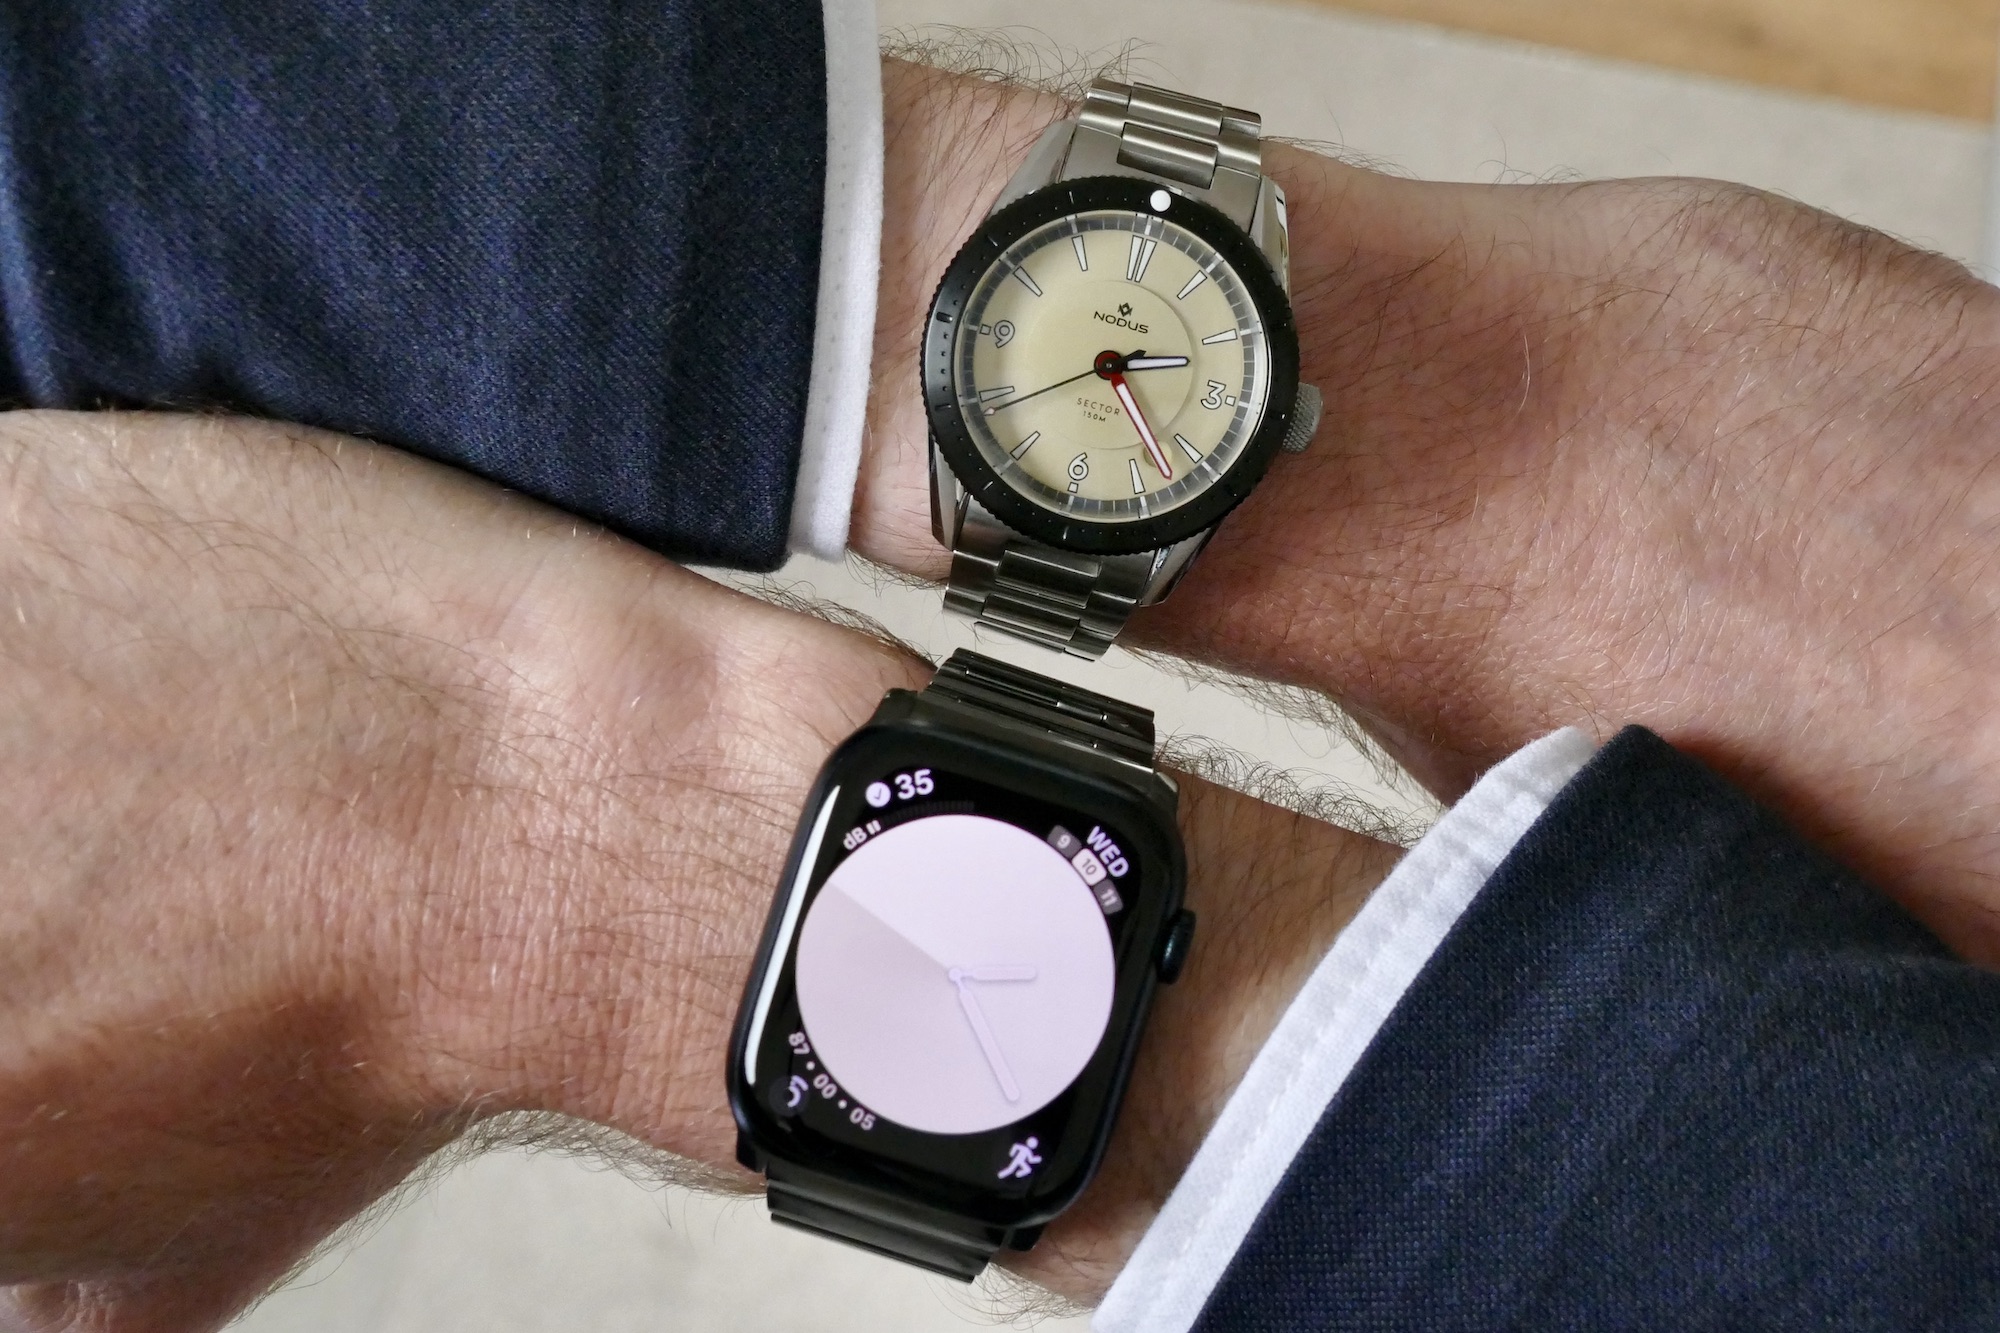 Nodus watch and Apple Watch.